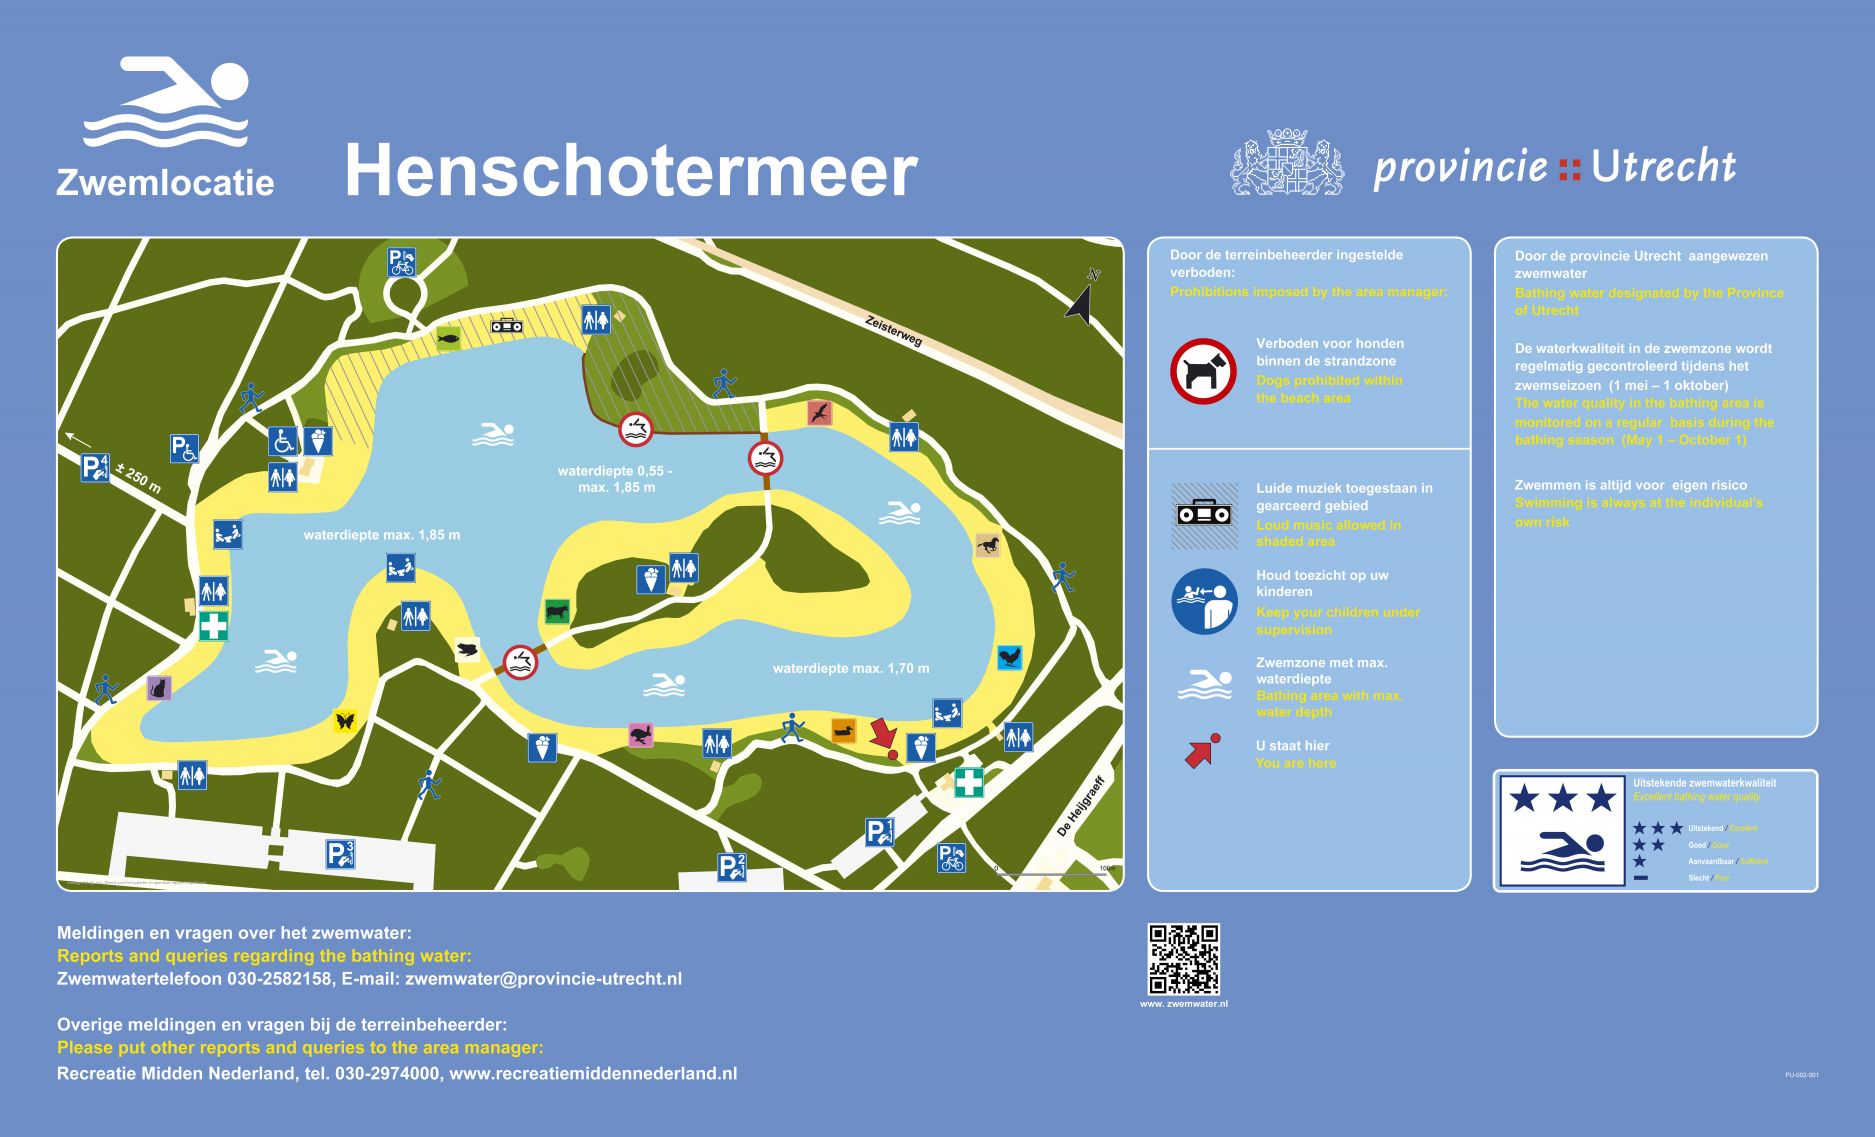 The information board at the swimming location Henschotermeer (Zuidzijde), Woudenberg